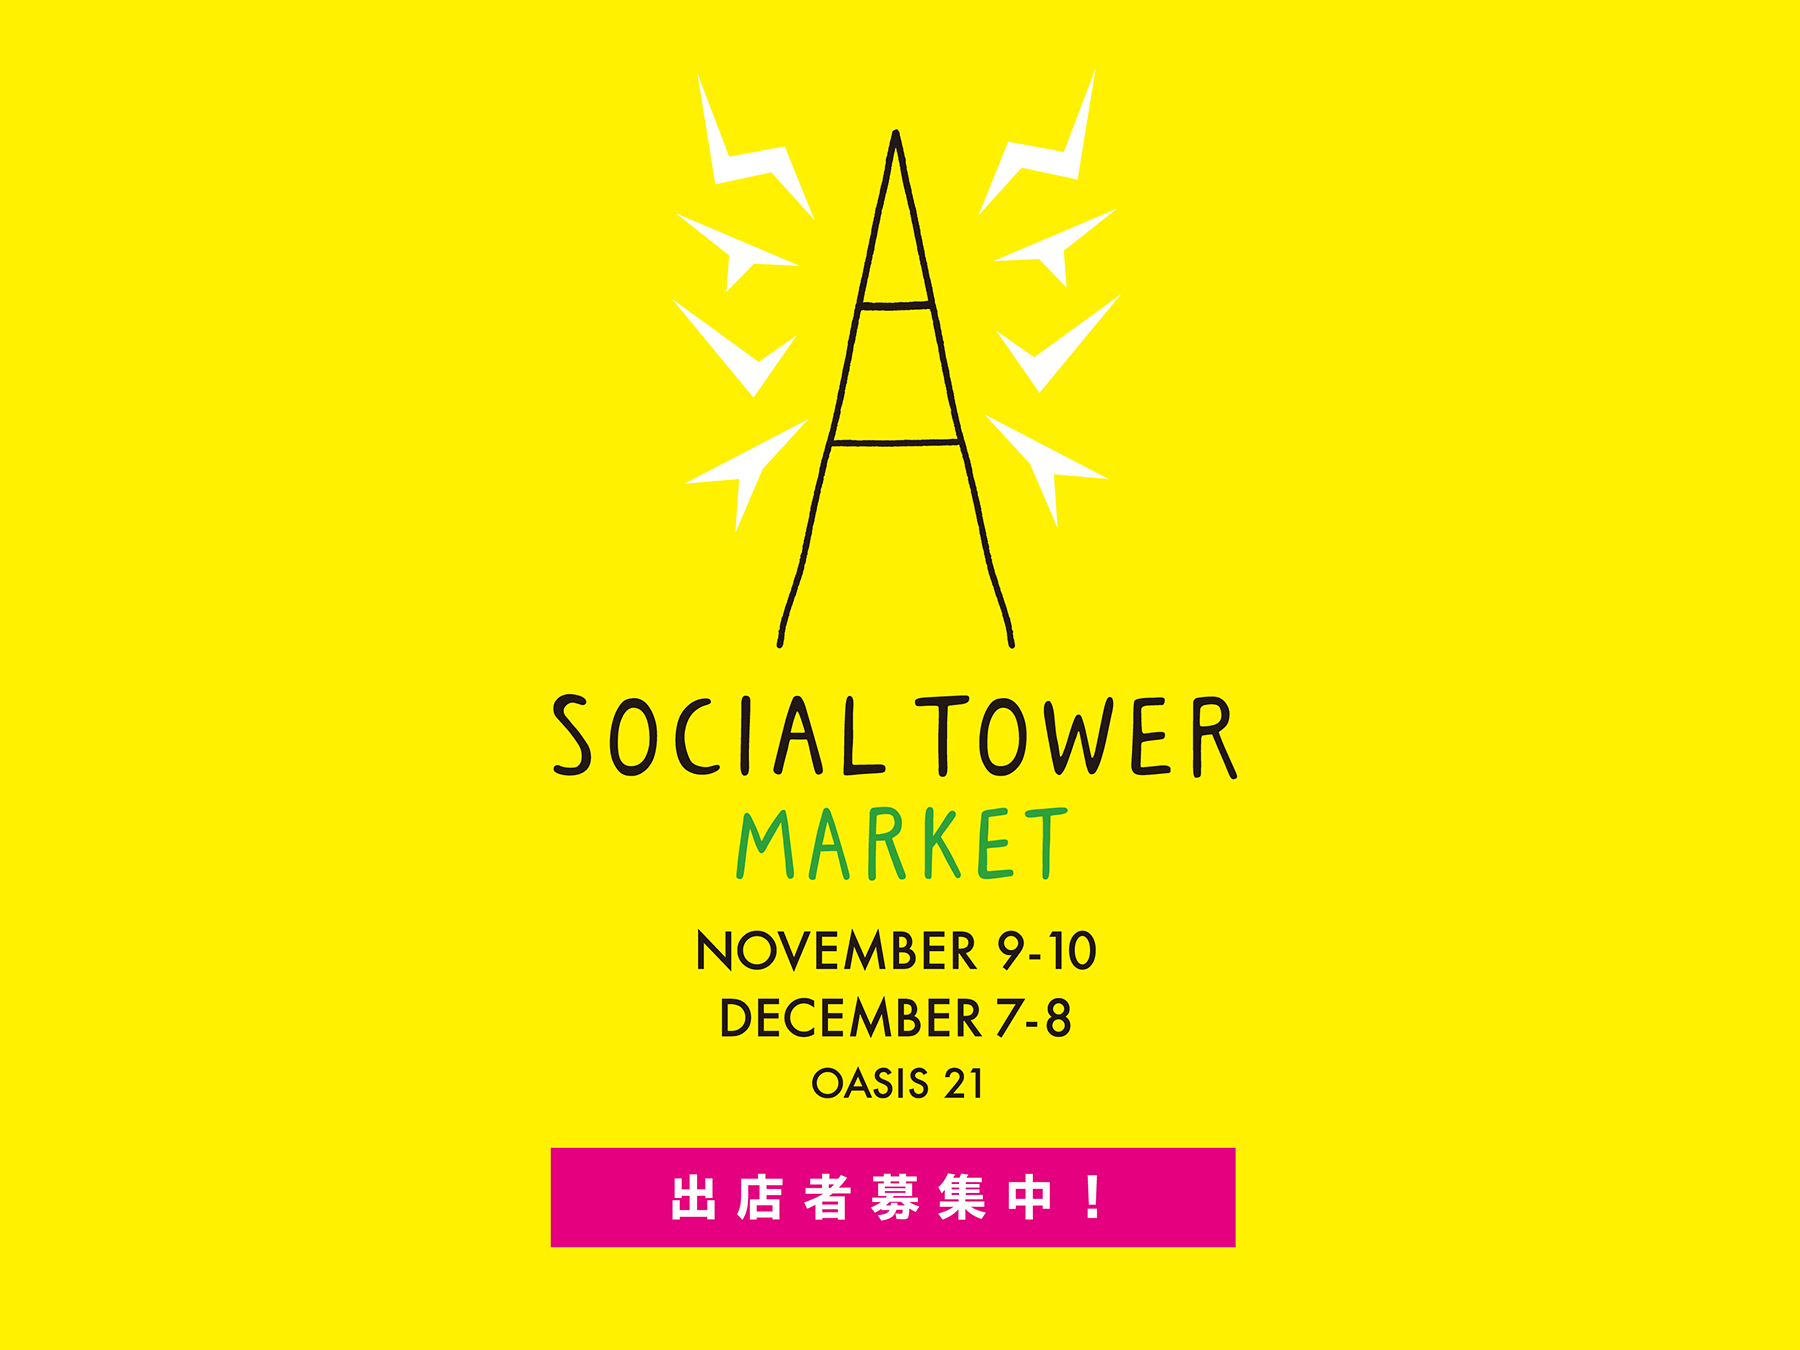 stm_admin - SOCIAL TOWER MARKET - 名古屋の街に新しいかたちの社交場を